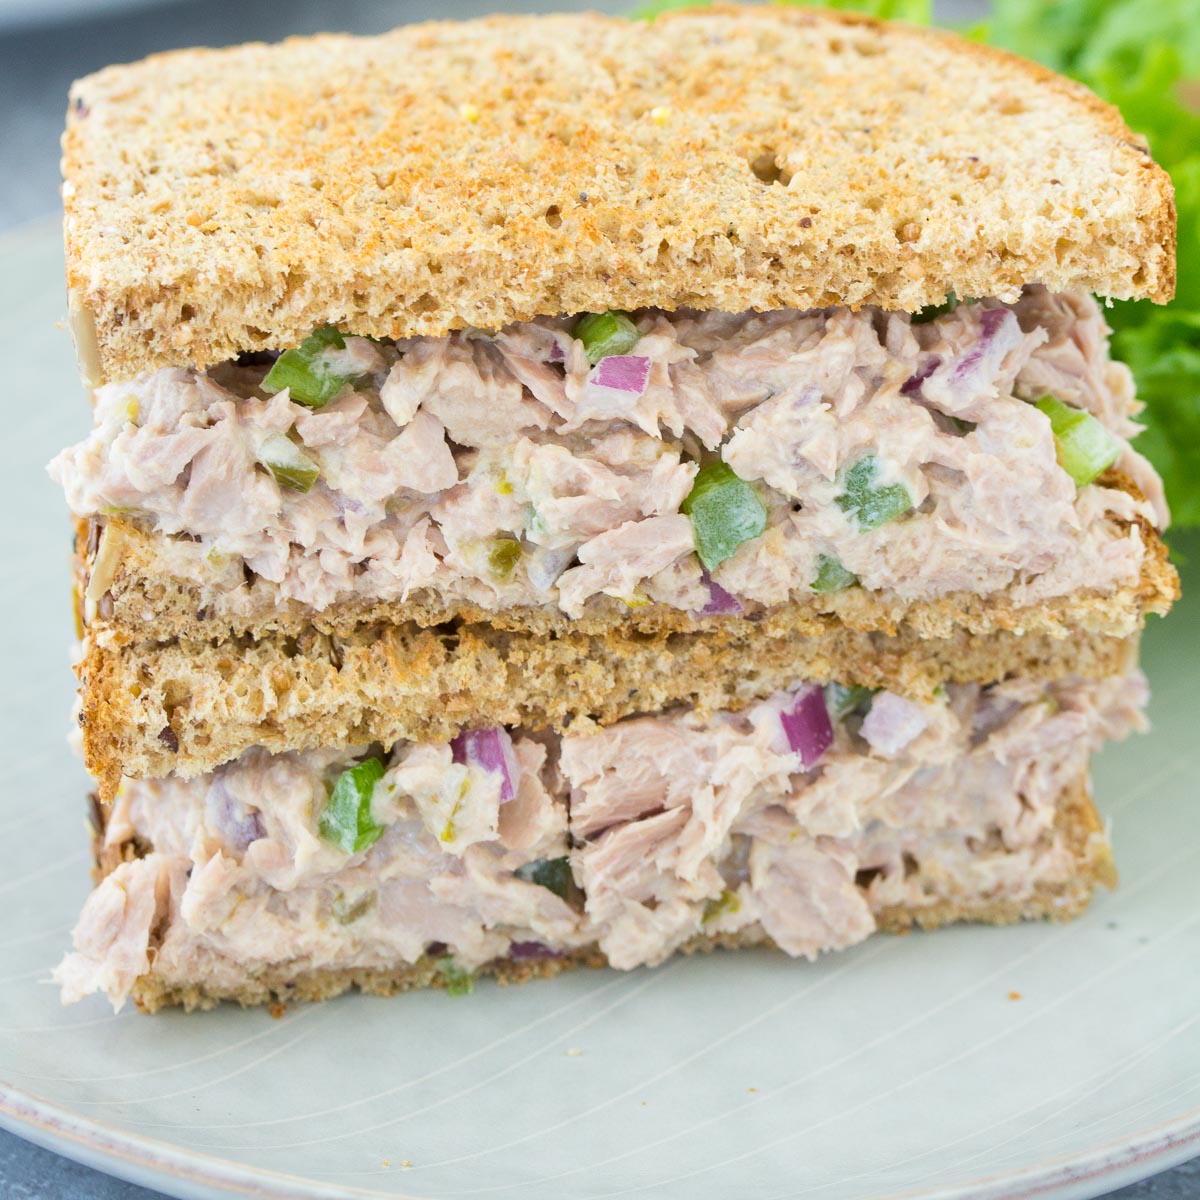 Tuna sandwiches. 80% mayonnaise.